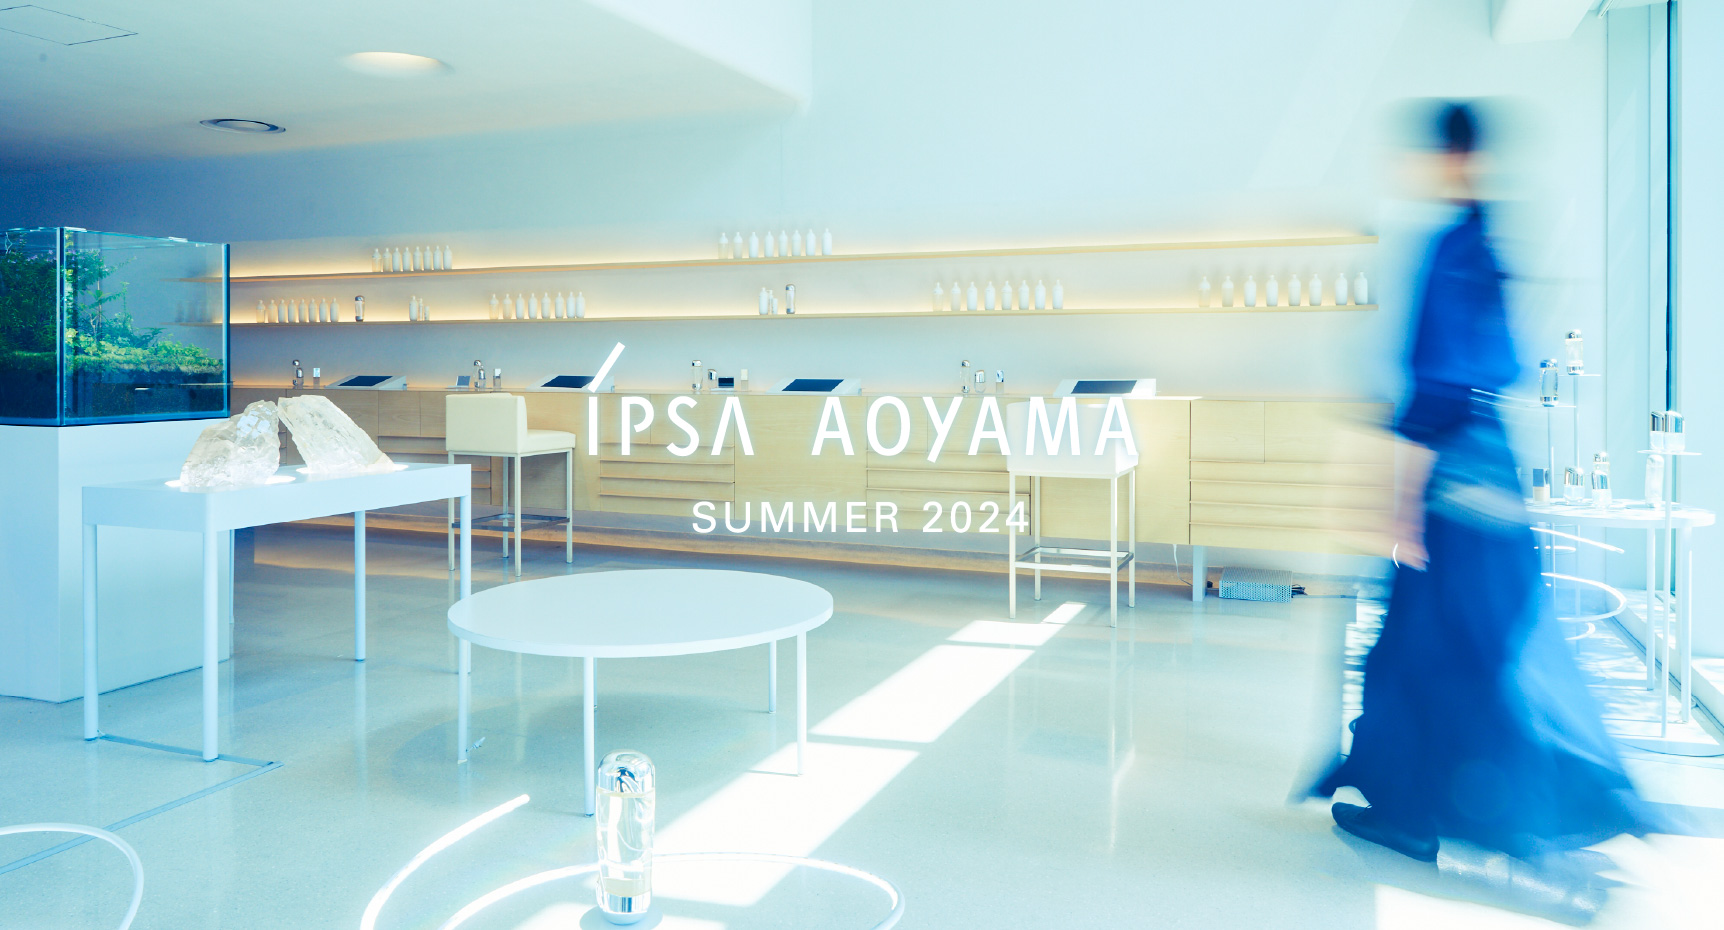 IPSA Aoyama Winter 2023 - 2024